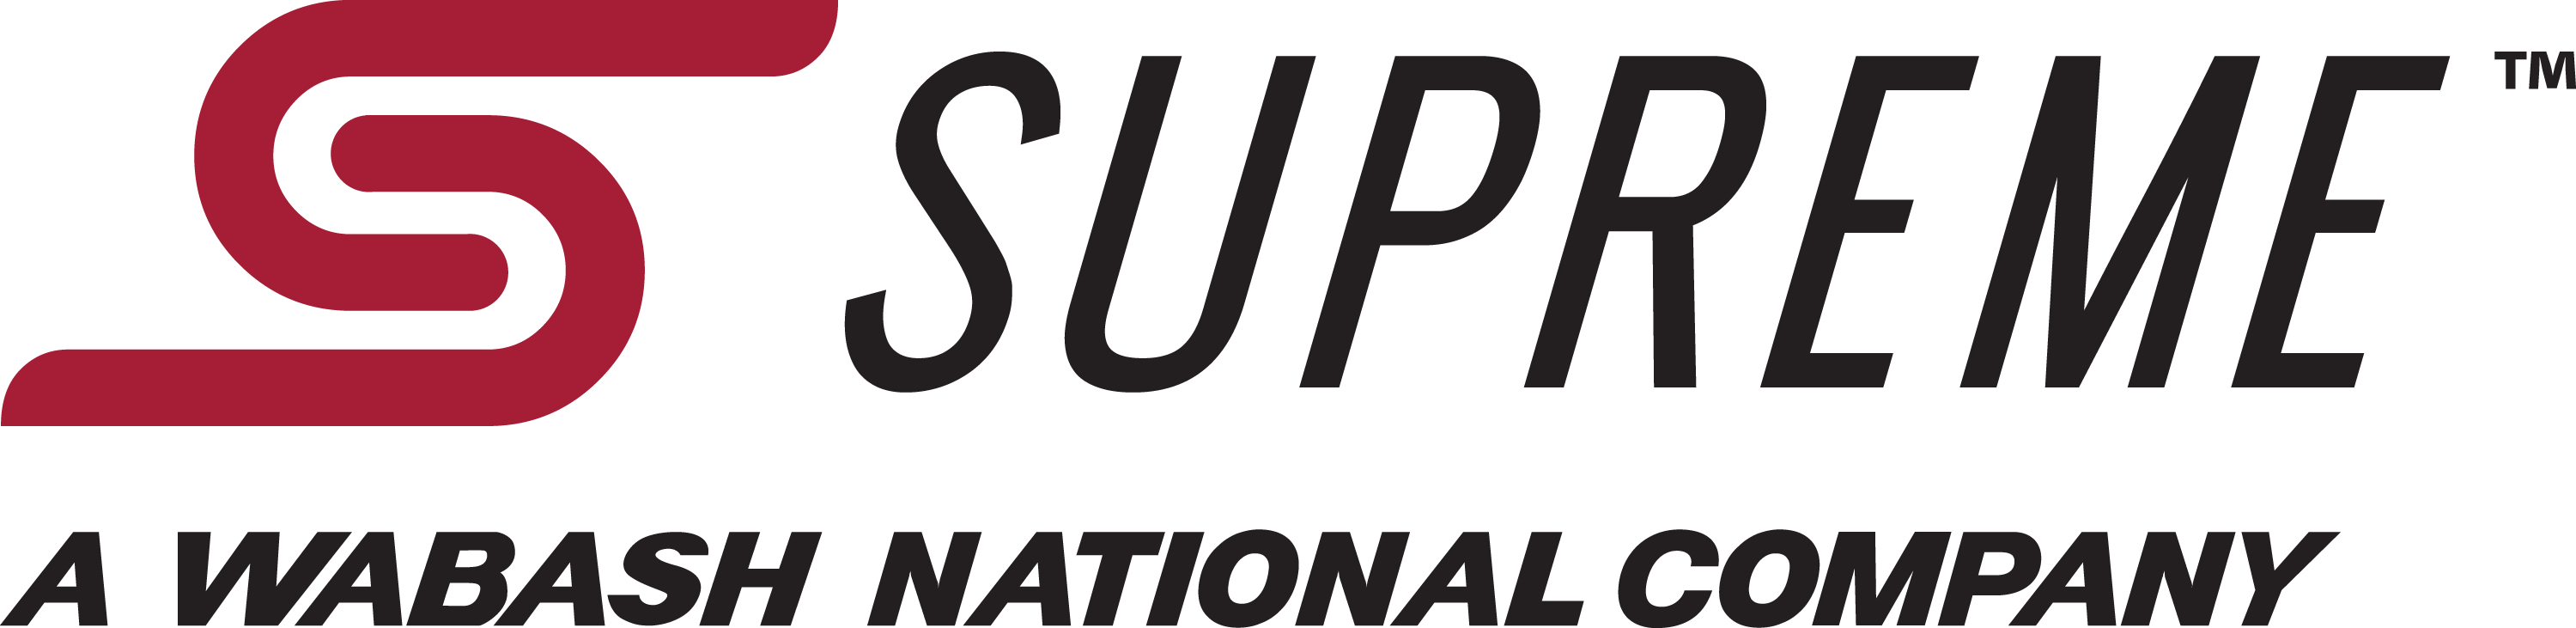 Supreme Corp Logo - Logo/Branding | SupremeCorp Portal